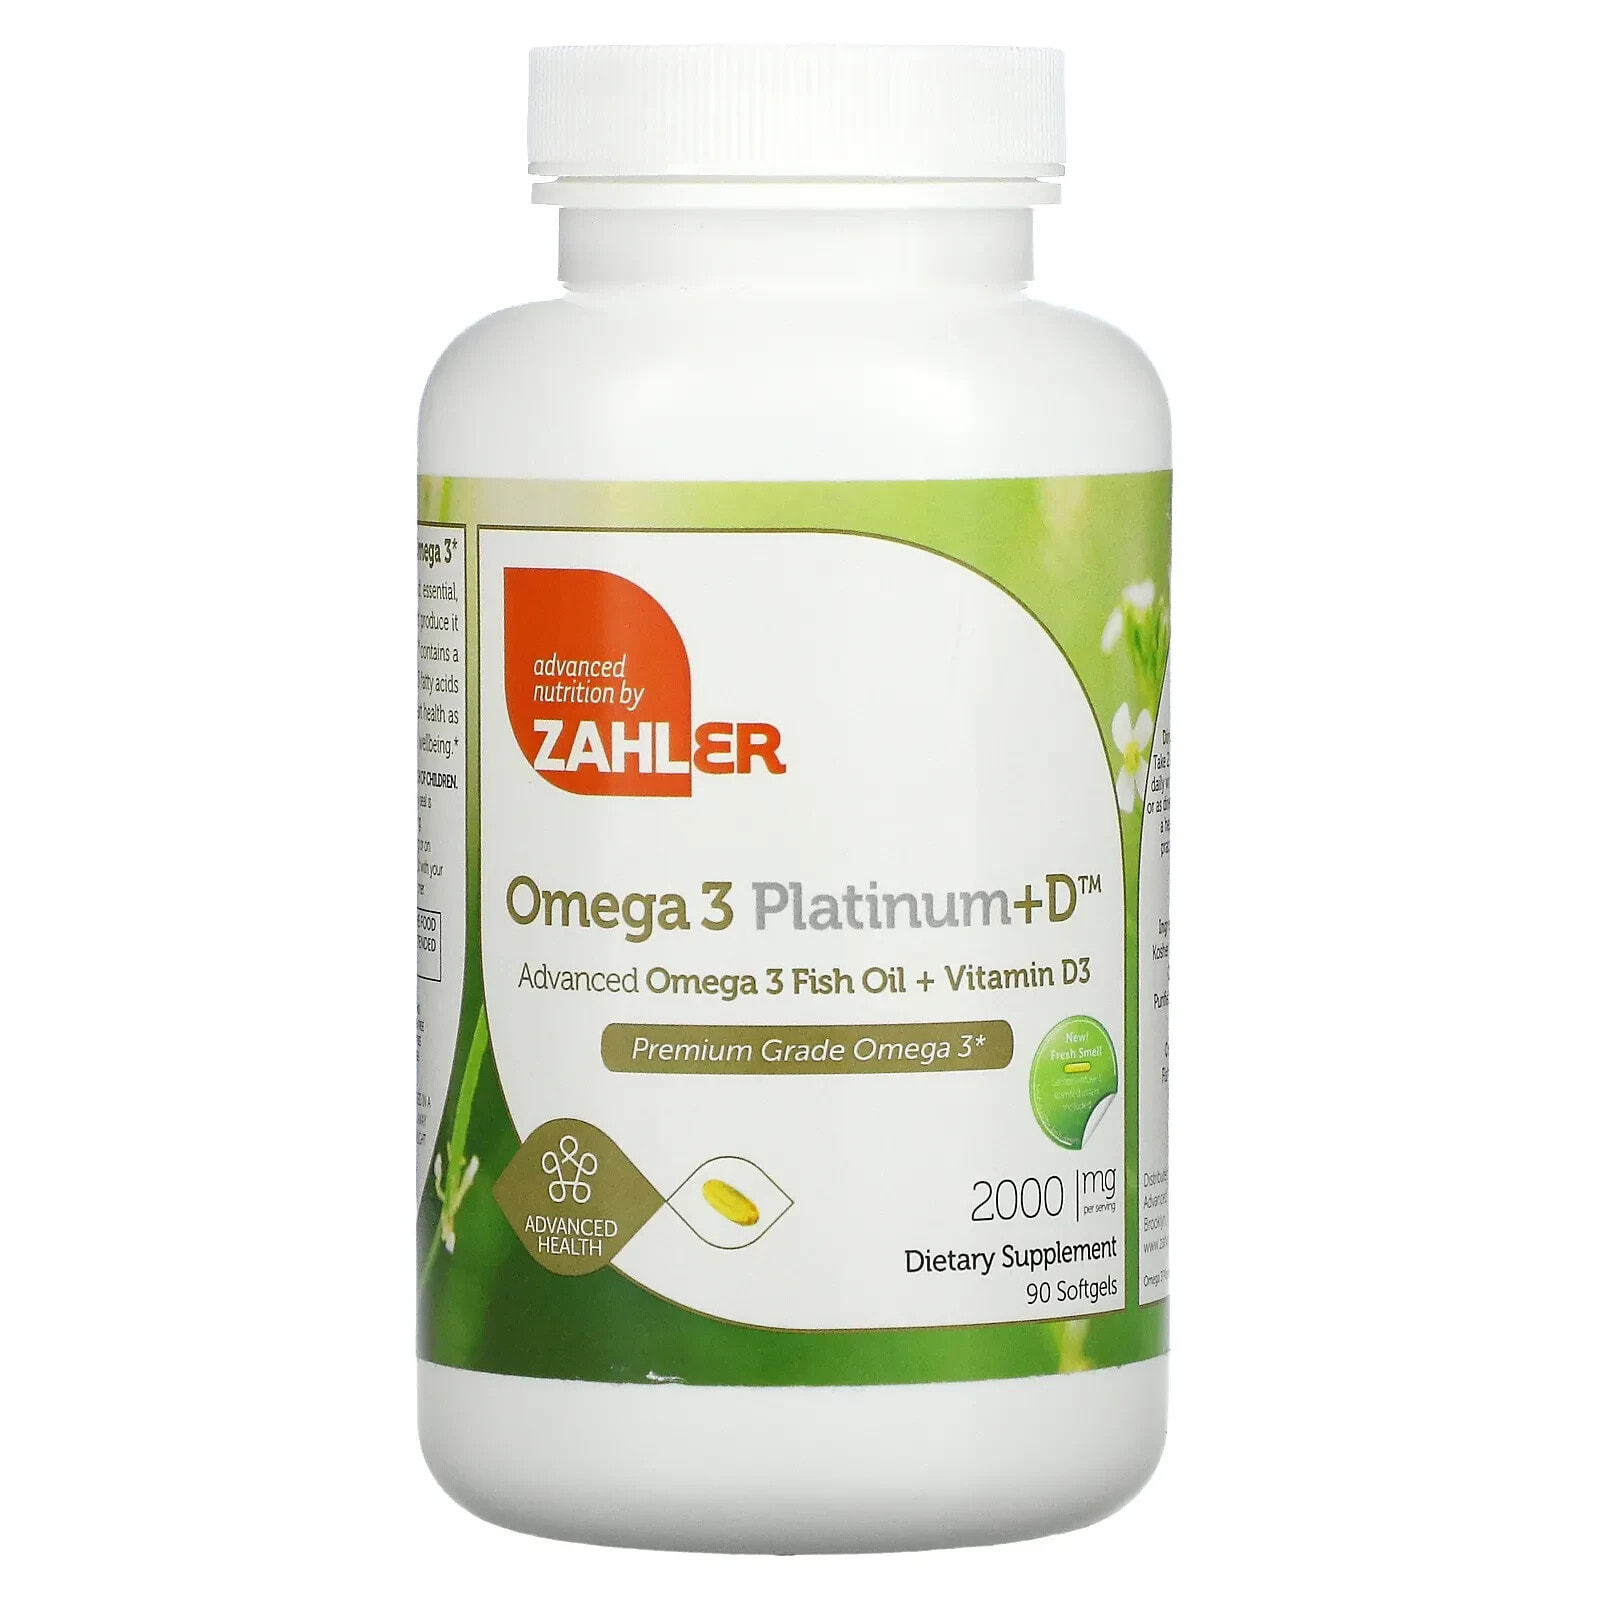 Zahler, Omega 3 Platinum+D, Advanced Omega 3 Fish Oil + Vitamin D3, 1,000 mg, 180 Softgels